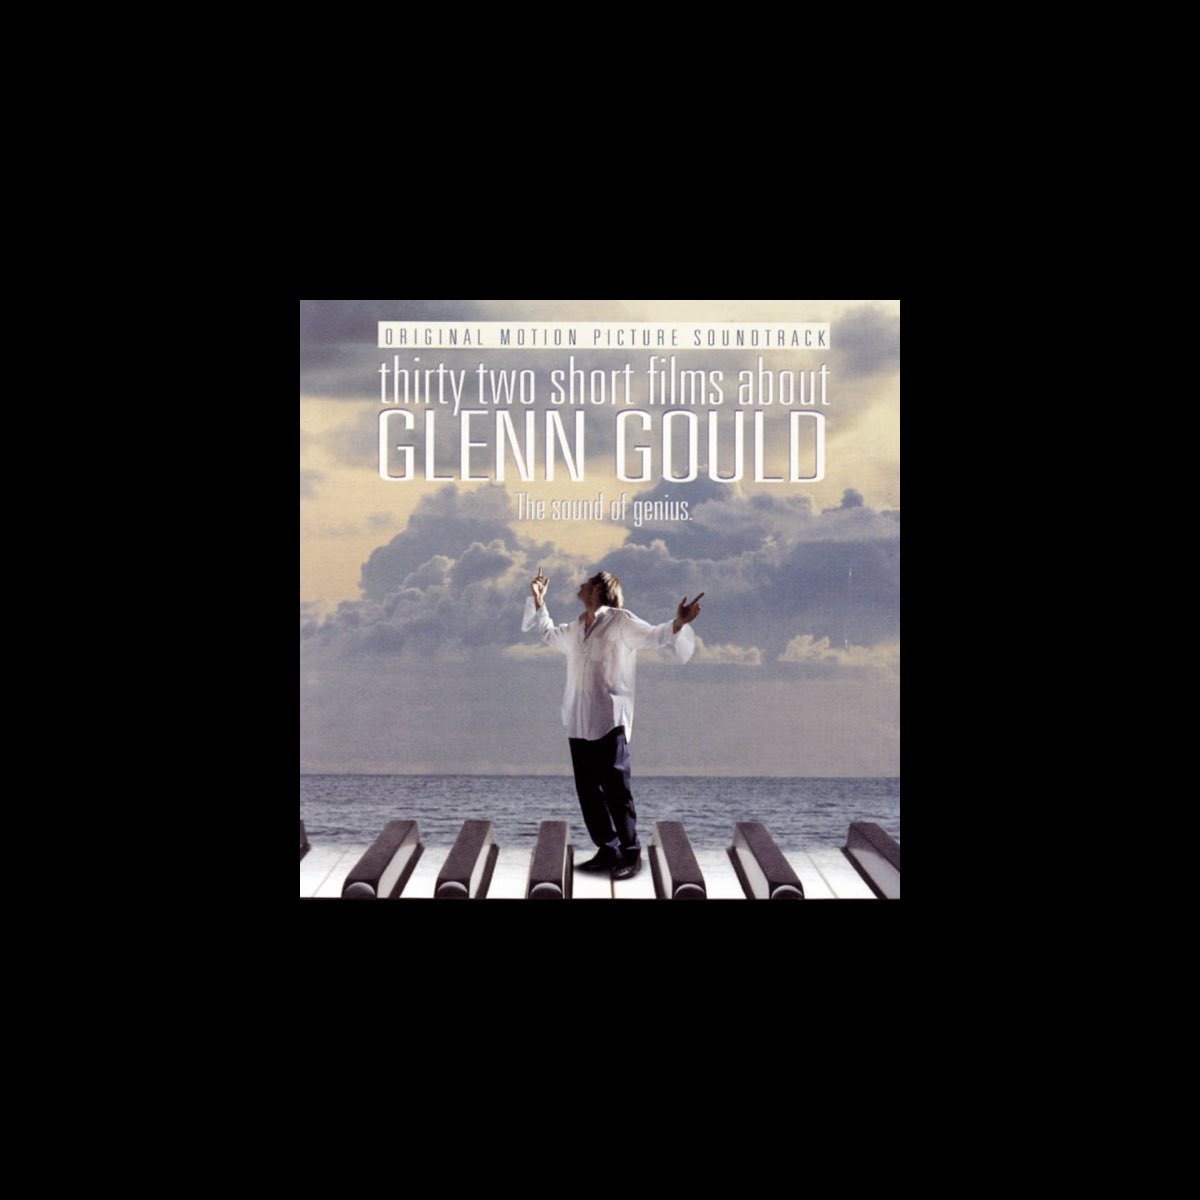 32 Short Films About Glenn Gould (Original Motion Picture Soundtrack) by Glenn  Gould on Apple Music